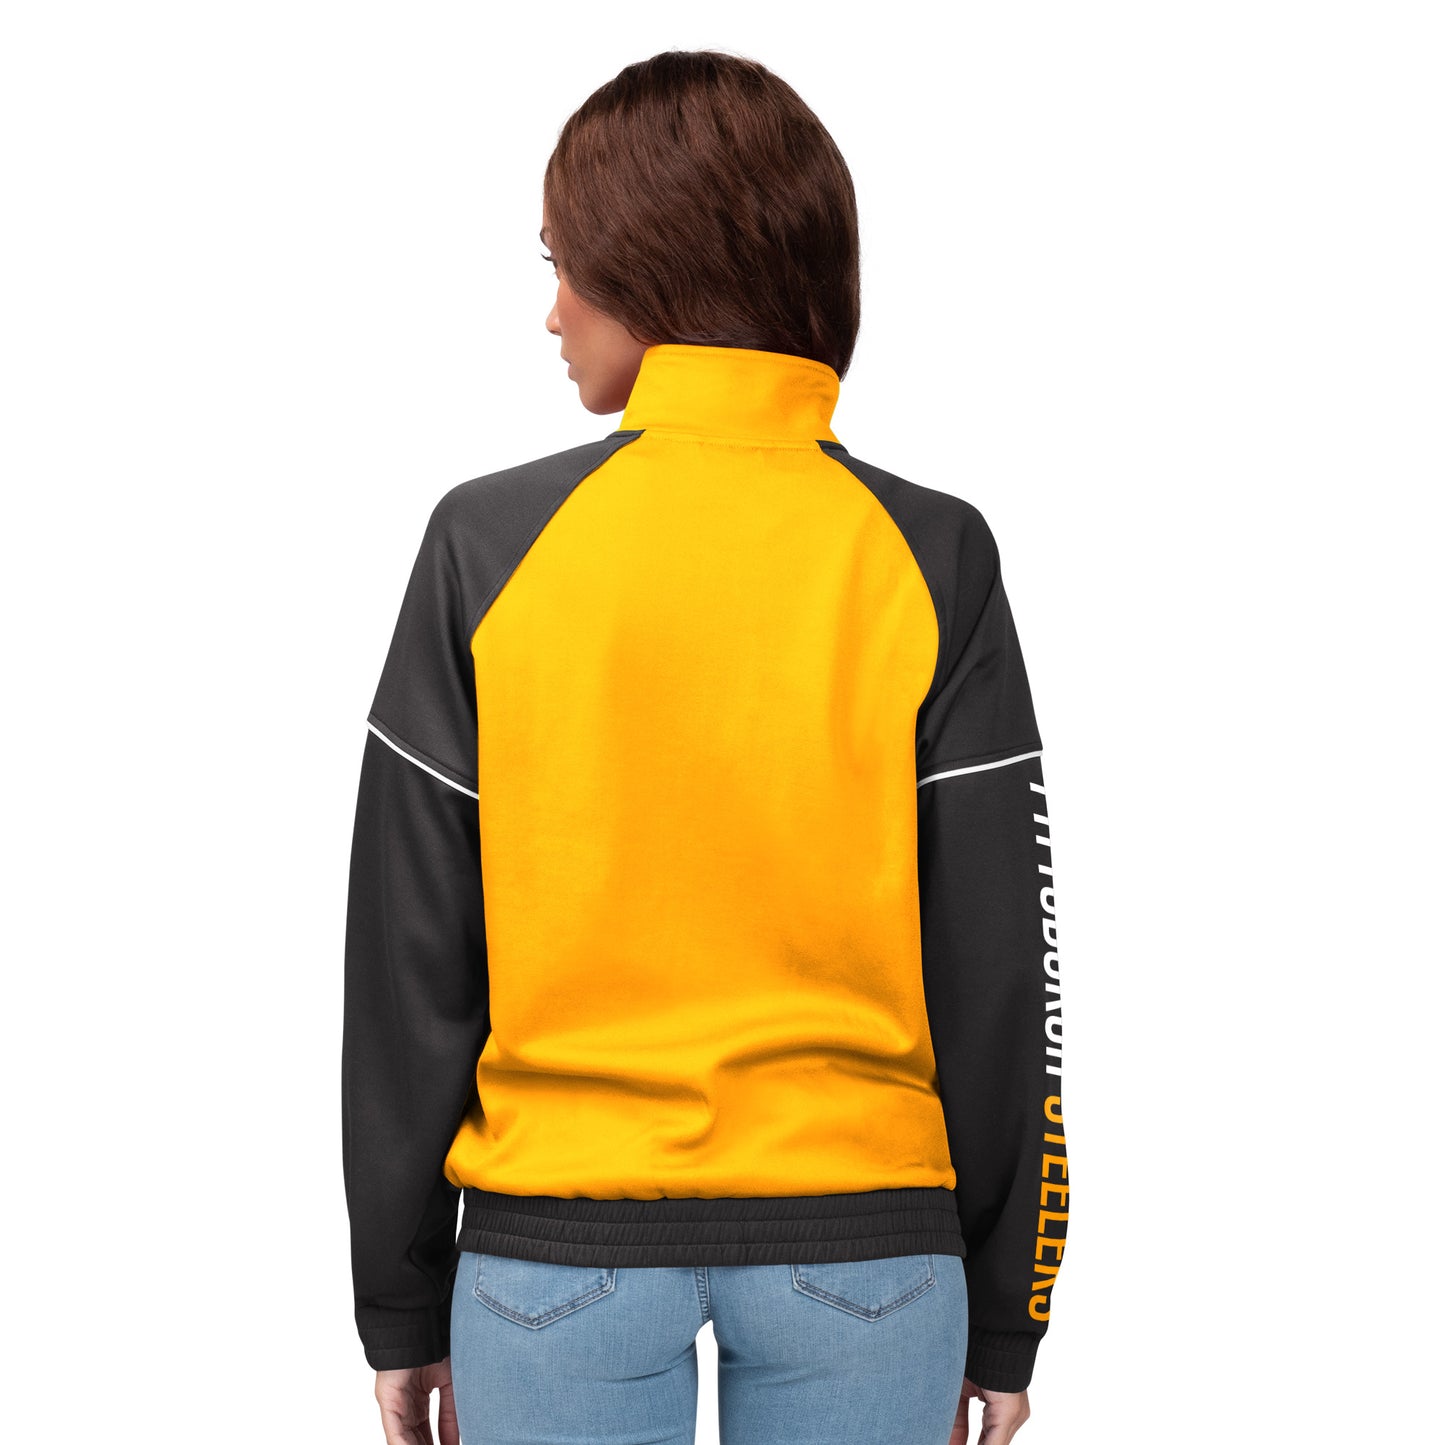 Pittsburgh Steelers Women's G-III Stadium Full-Zip Track Jacket – Black / Yellow